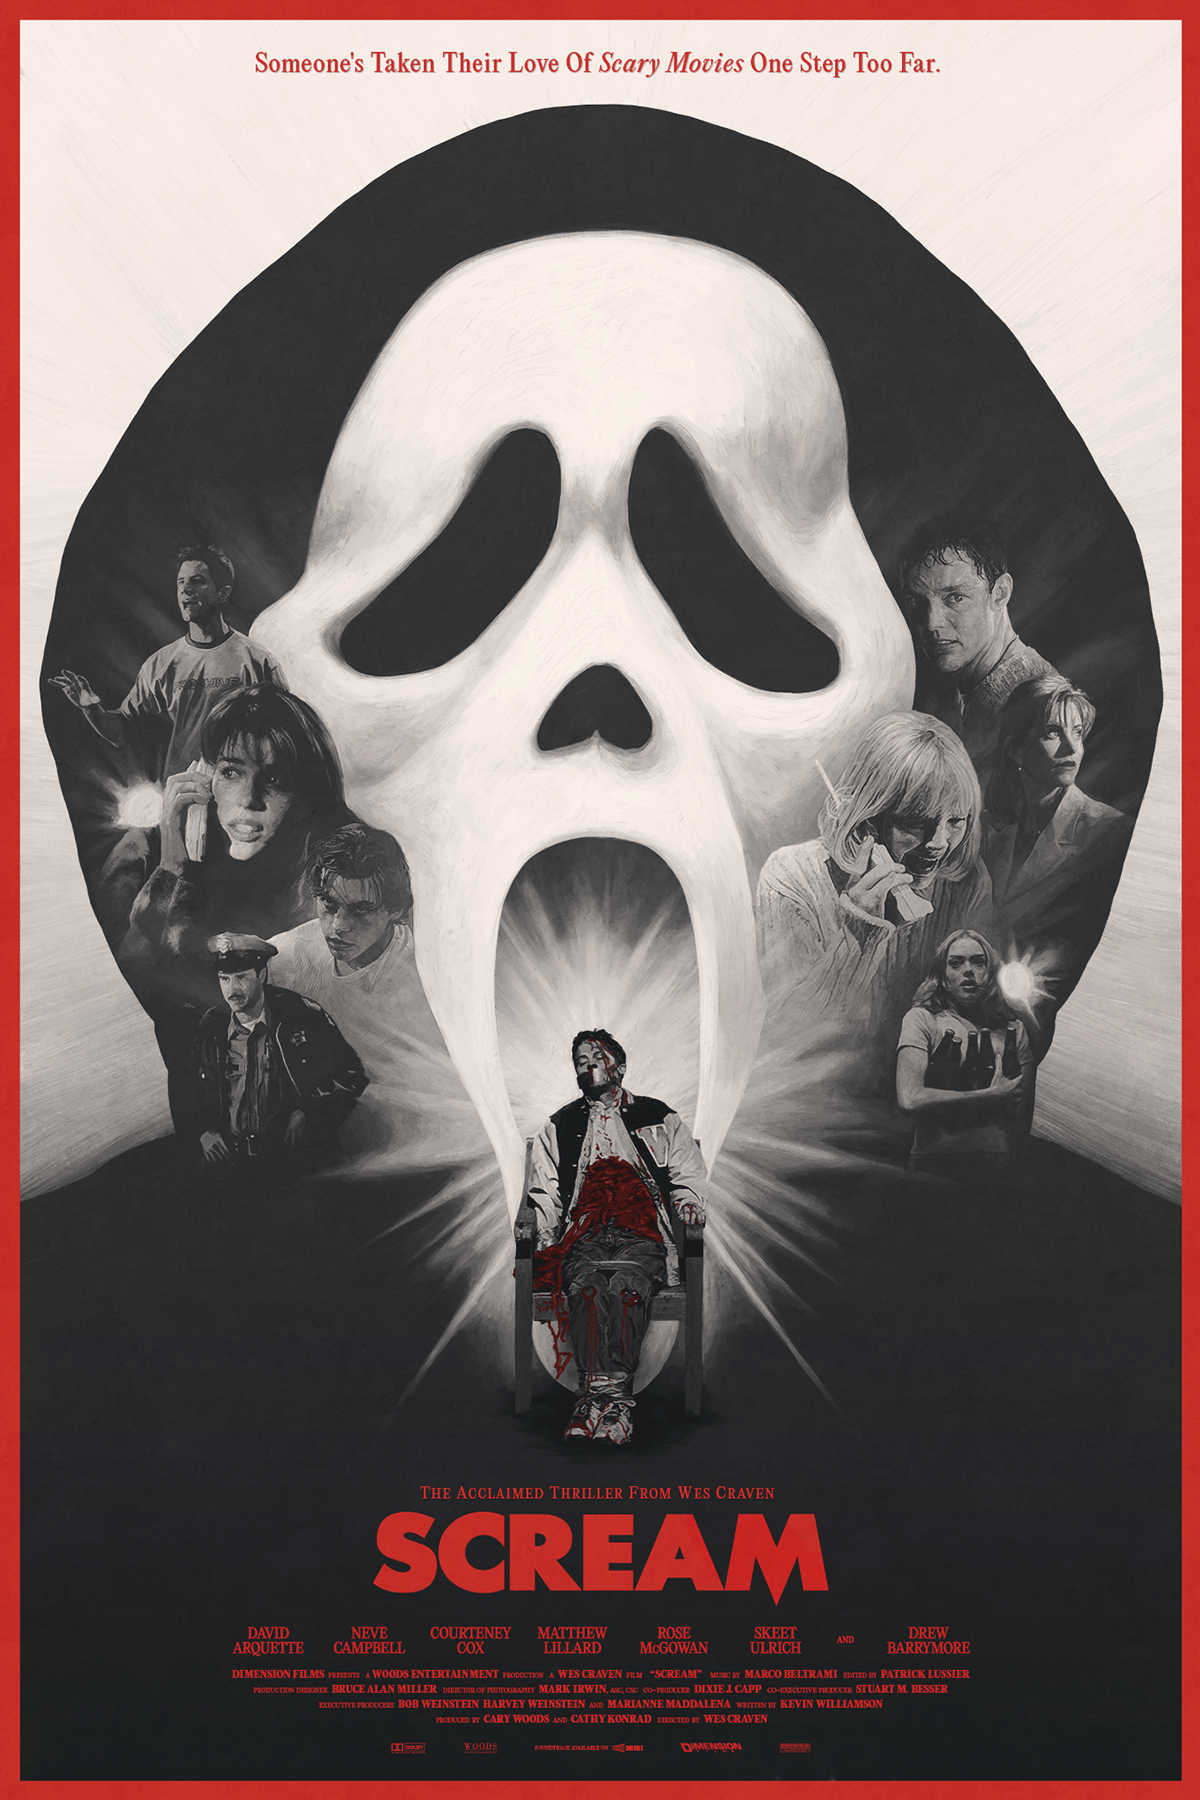 art Cinema digital illustration Film   GHOSTFACE horror movie poster painting   slasher thriller